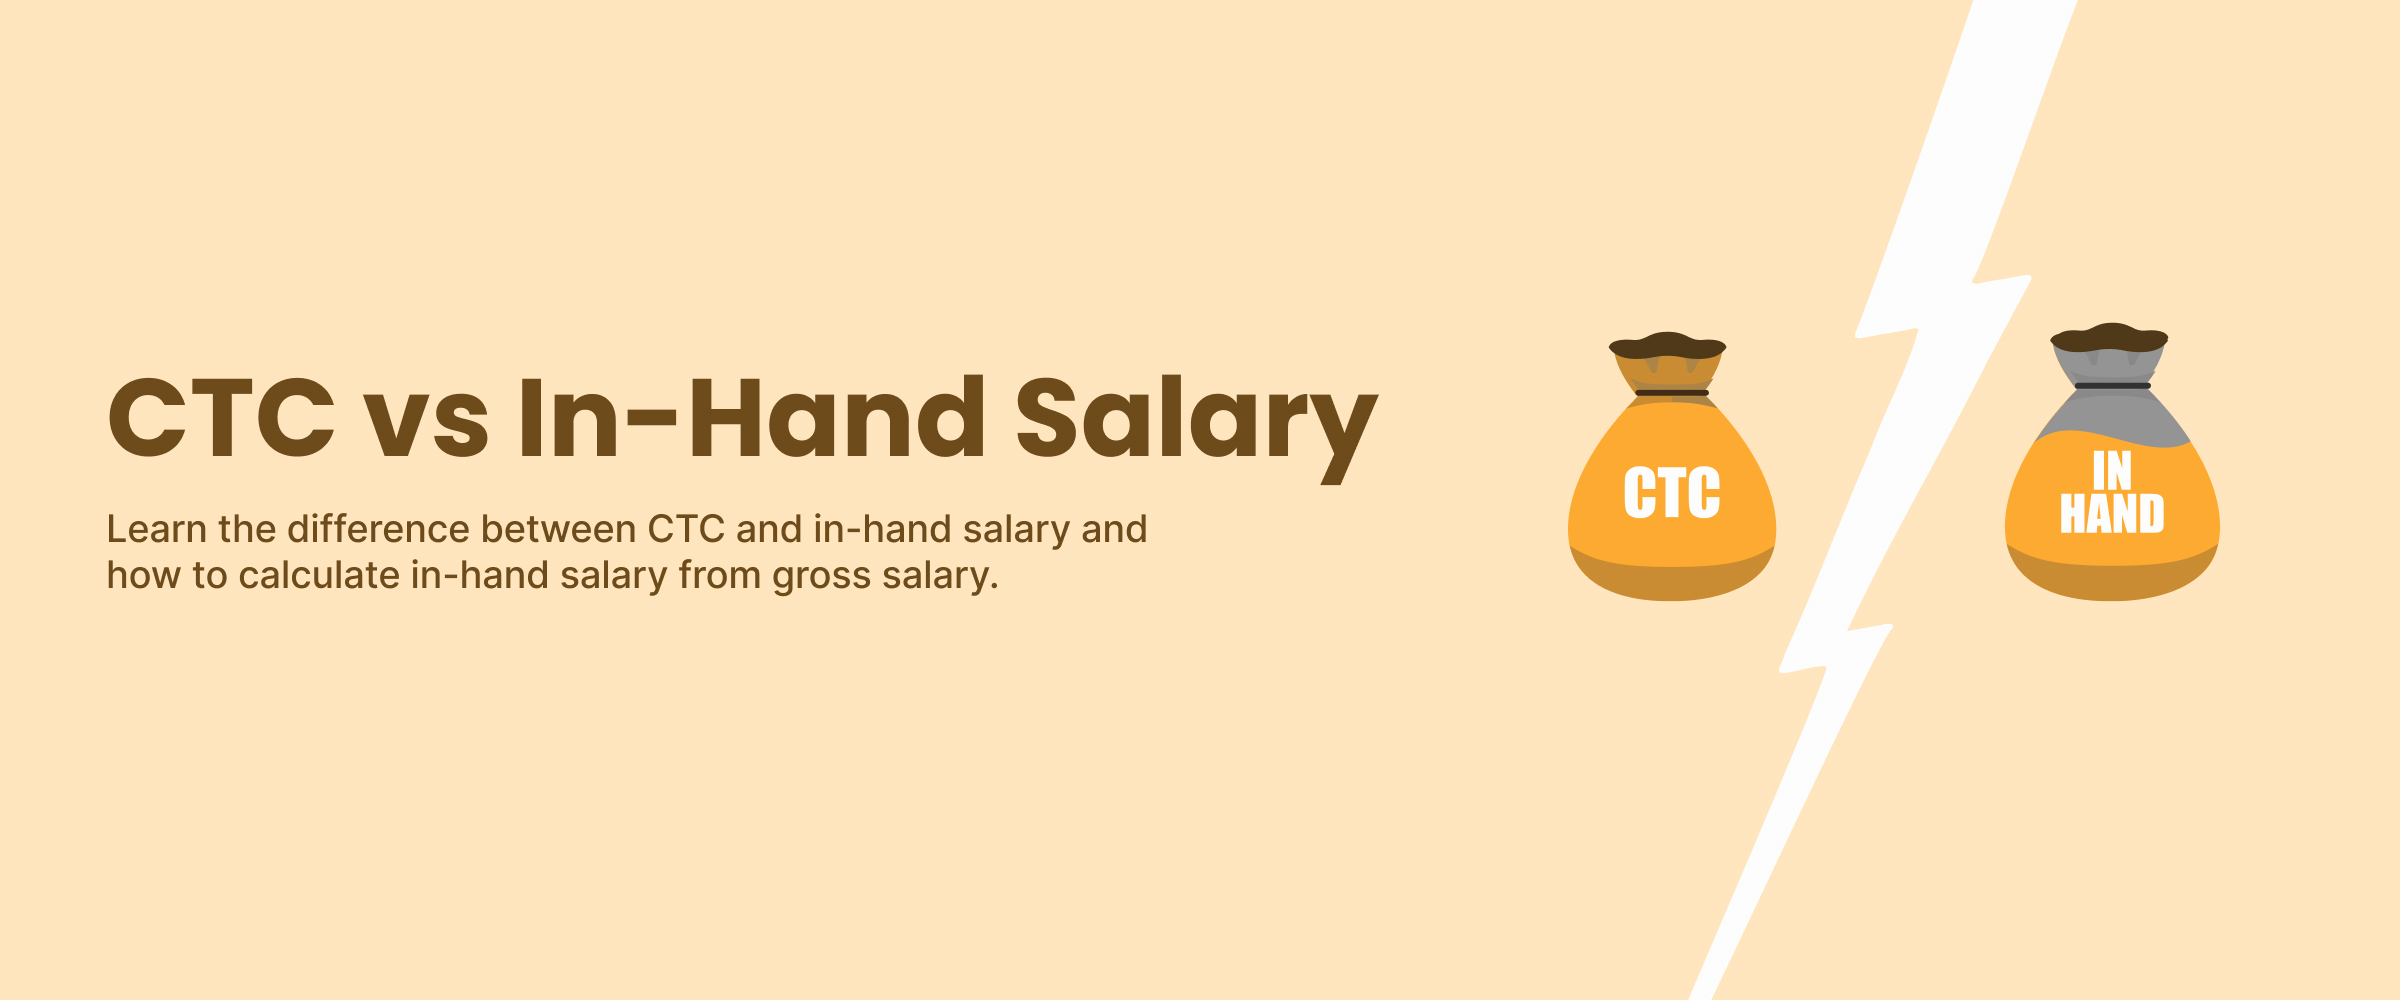 CTC vs In-Hand Salary